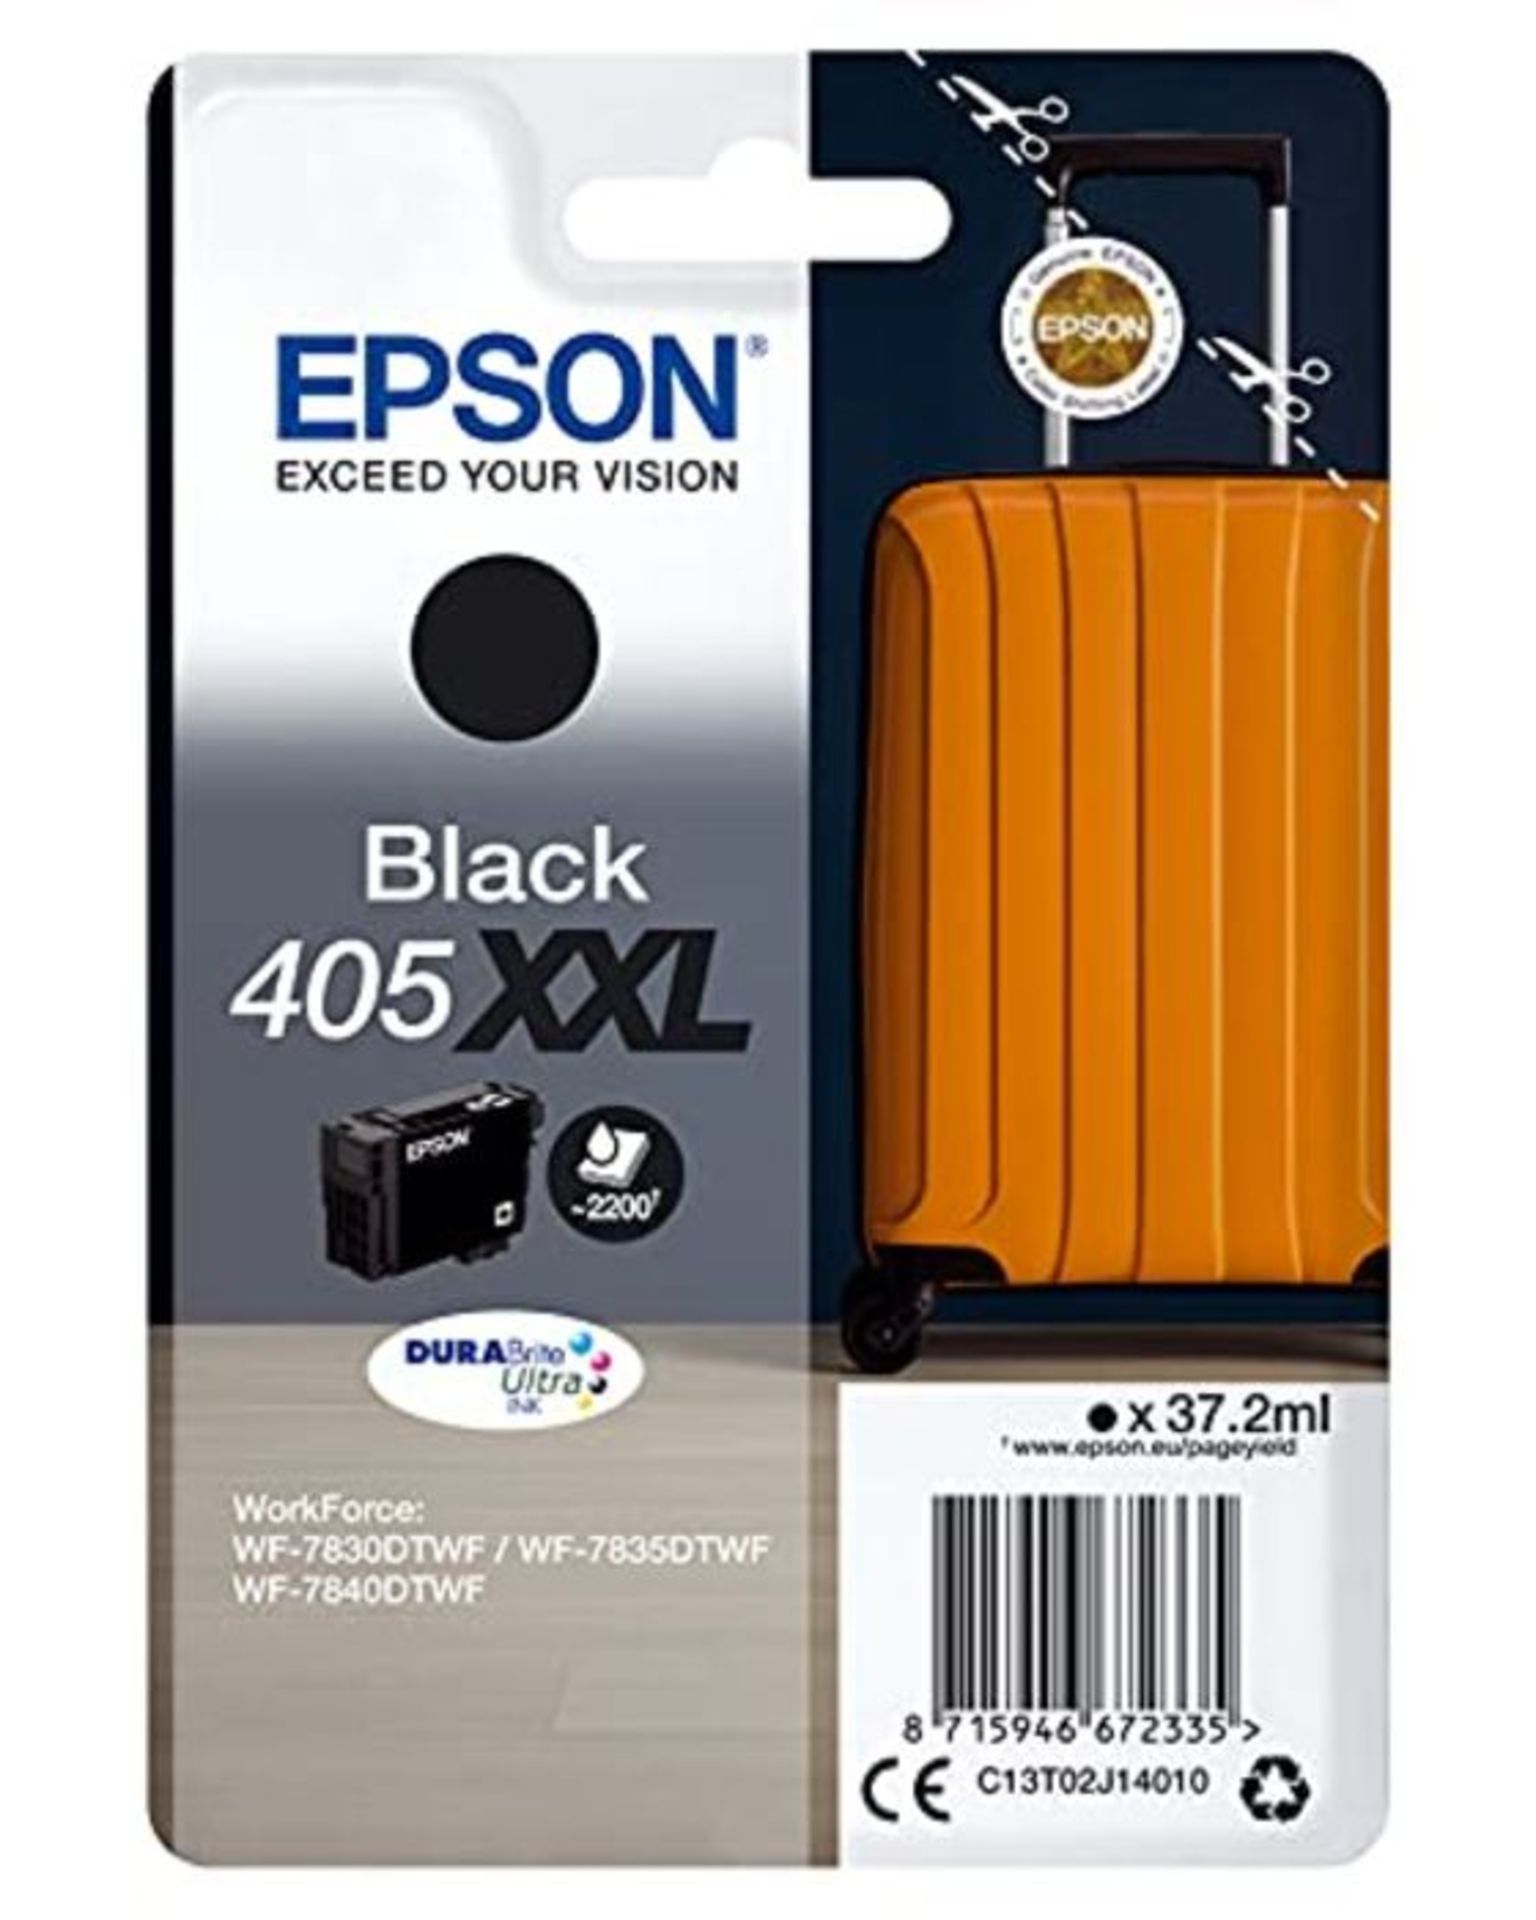 Epson 405XXL Black Suitcase High Yield Genuine, DURABrite Ultra Ink, Amazon Dash Reple